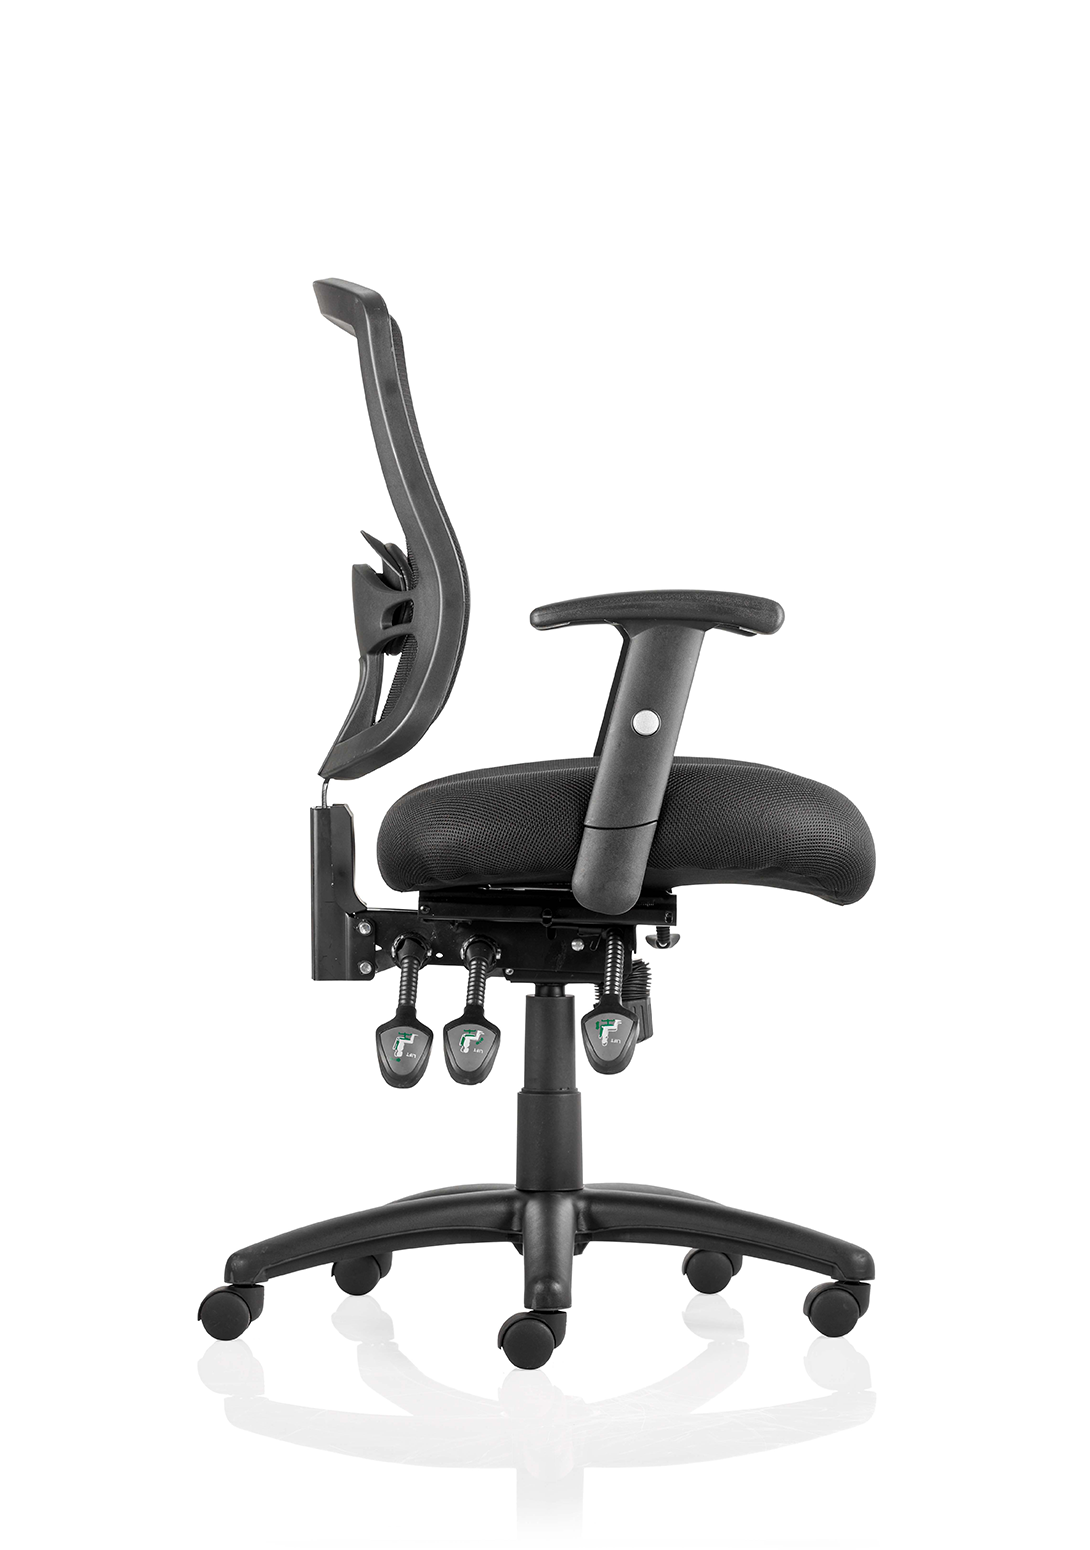 Portland III Home Office Chair | Operator Chair | Home Office Furniture | Ergonomic Chair | Swivel Chair | Mesh Chair